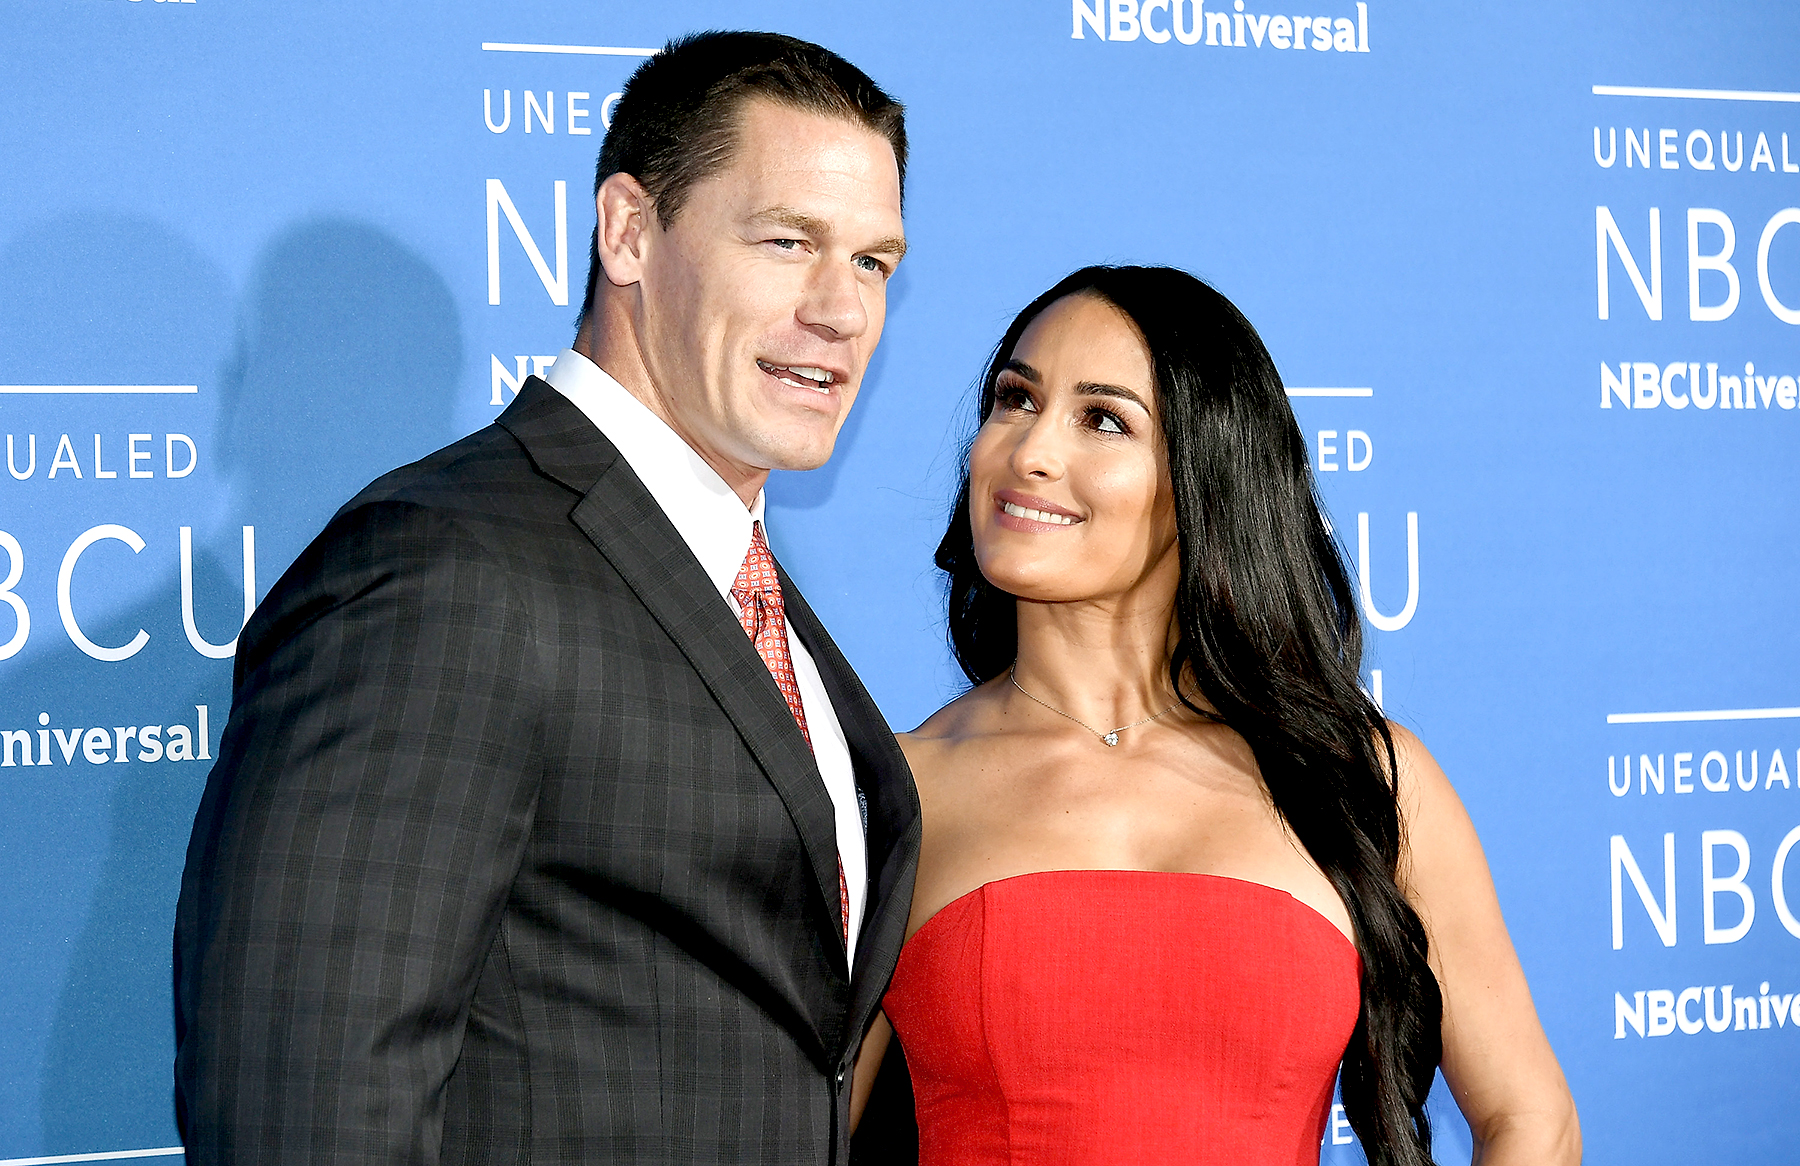 John Cena and Nikki Bella A Timeline of Their Relationship